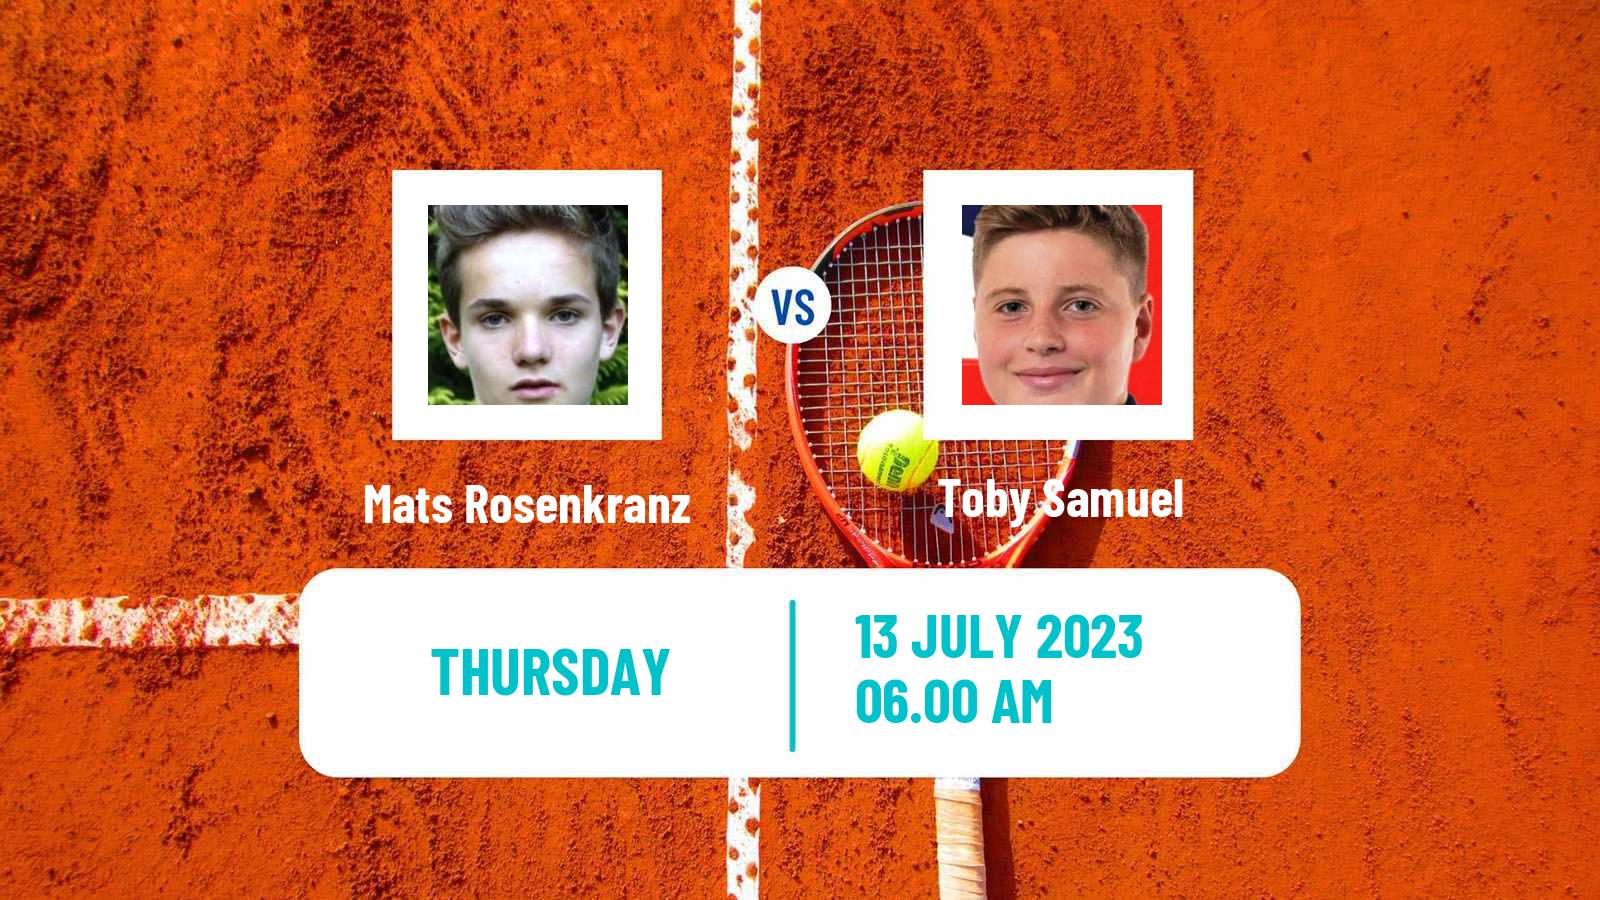 Tennis ITF M25 Nottingham 4 Men Mats Rosenkranz - Toby Samuel